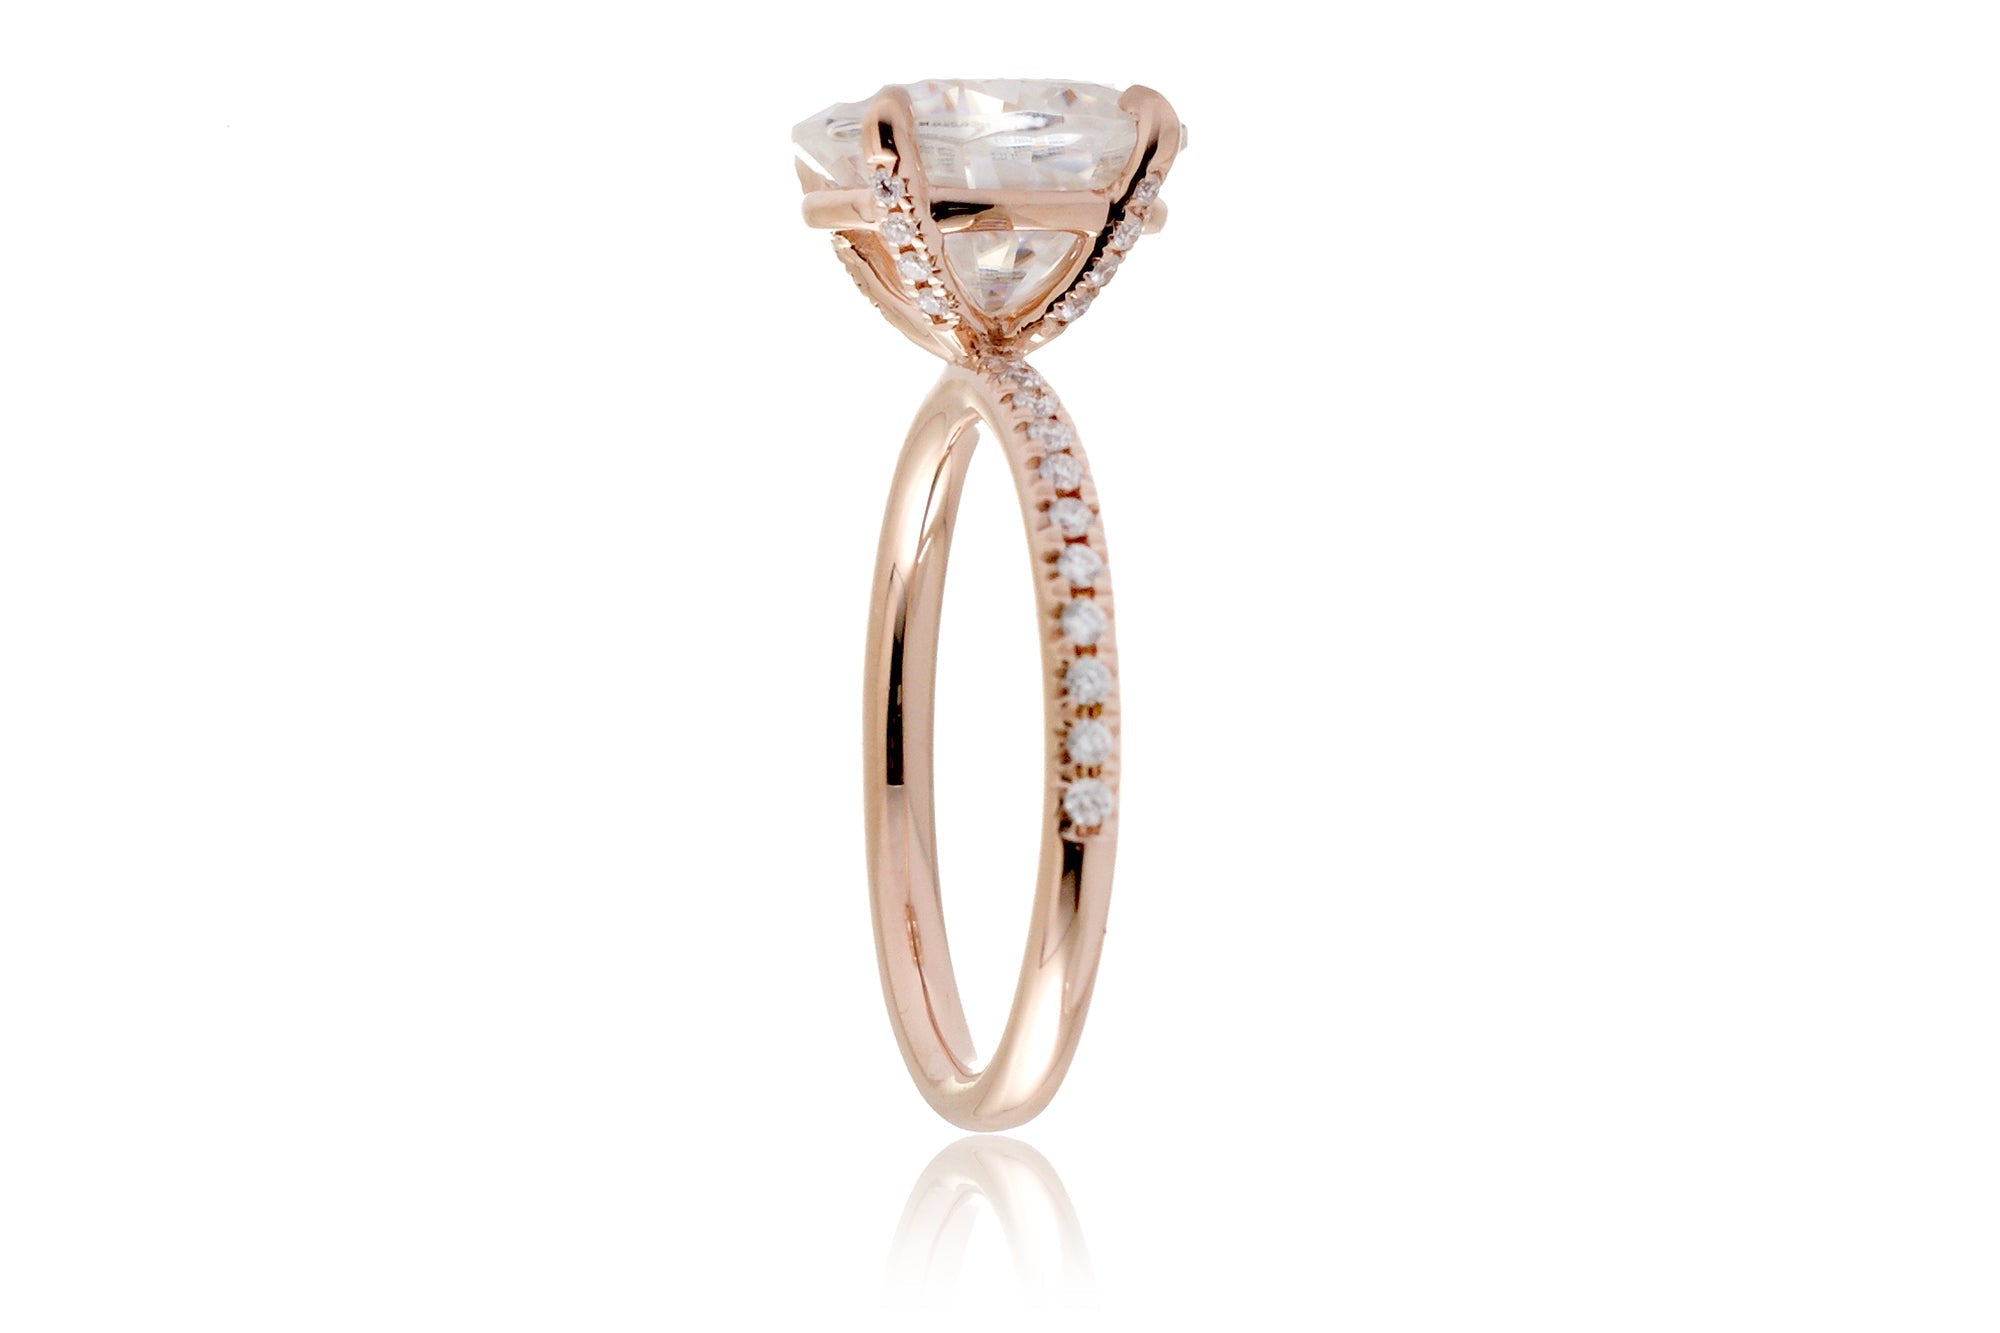 The Ava Emerald Cut Diamond Ring (Lab-Grown)